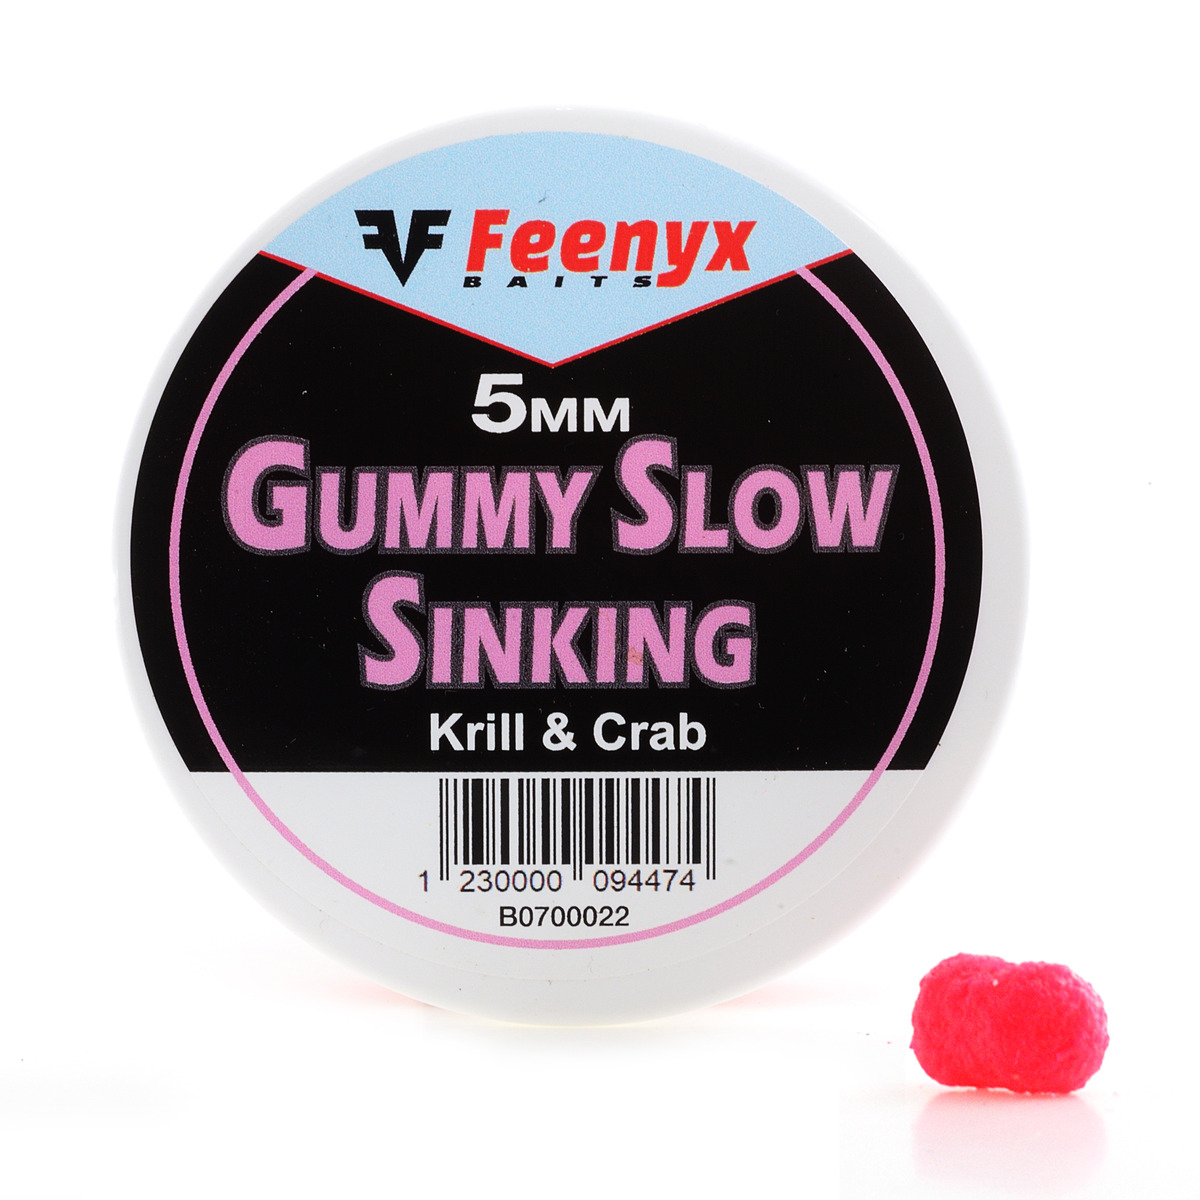 Feenyx Gummy Slow Sinking Krill & Crab - 5 mm